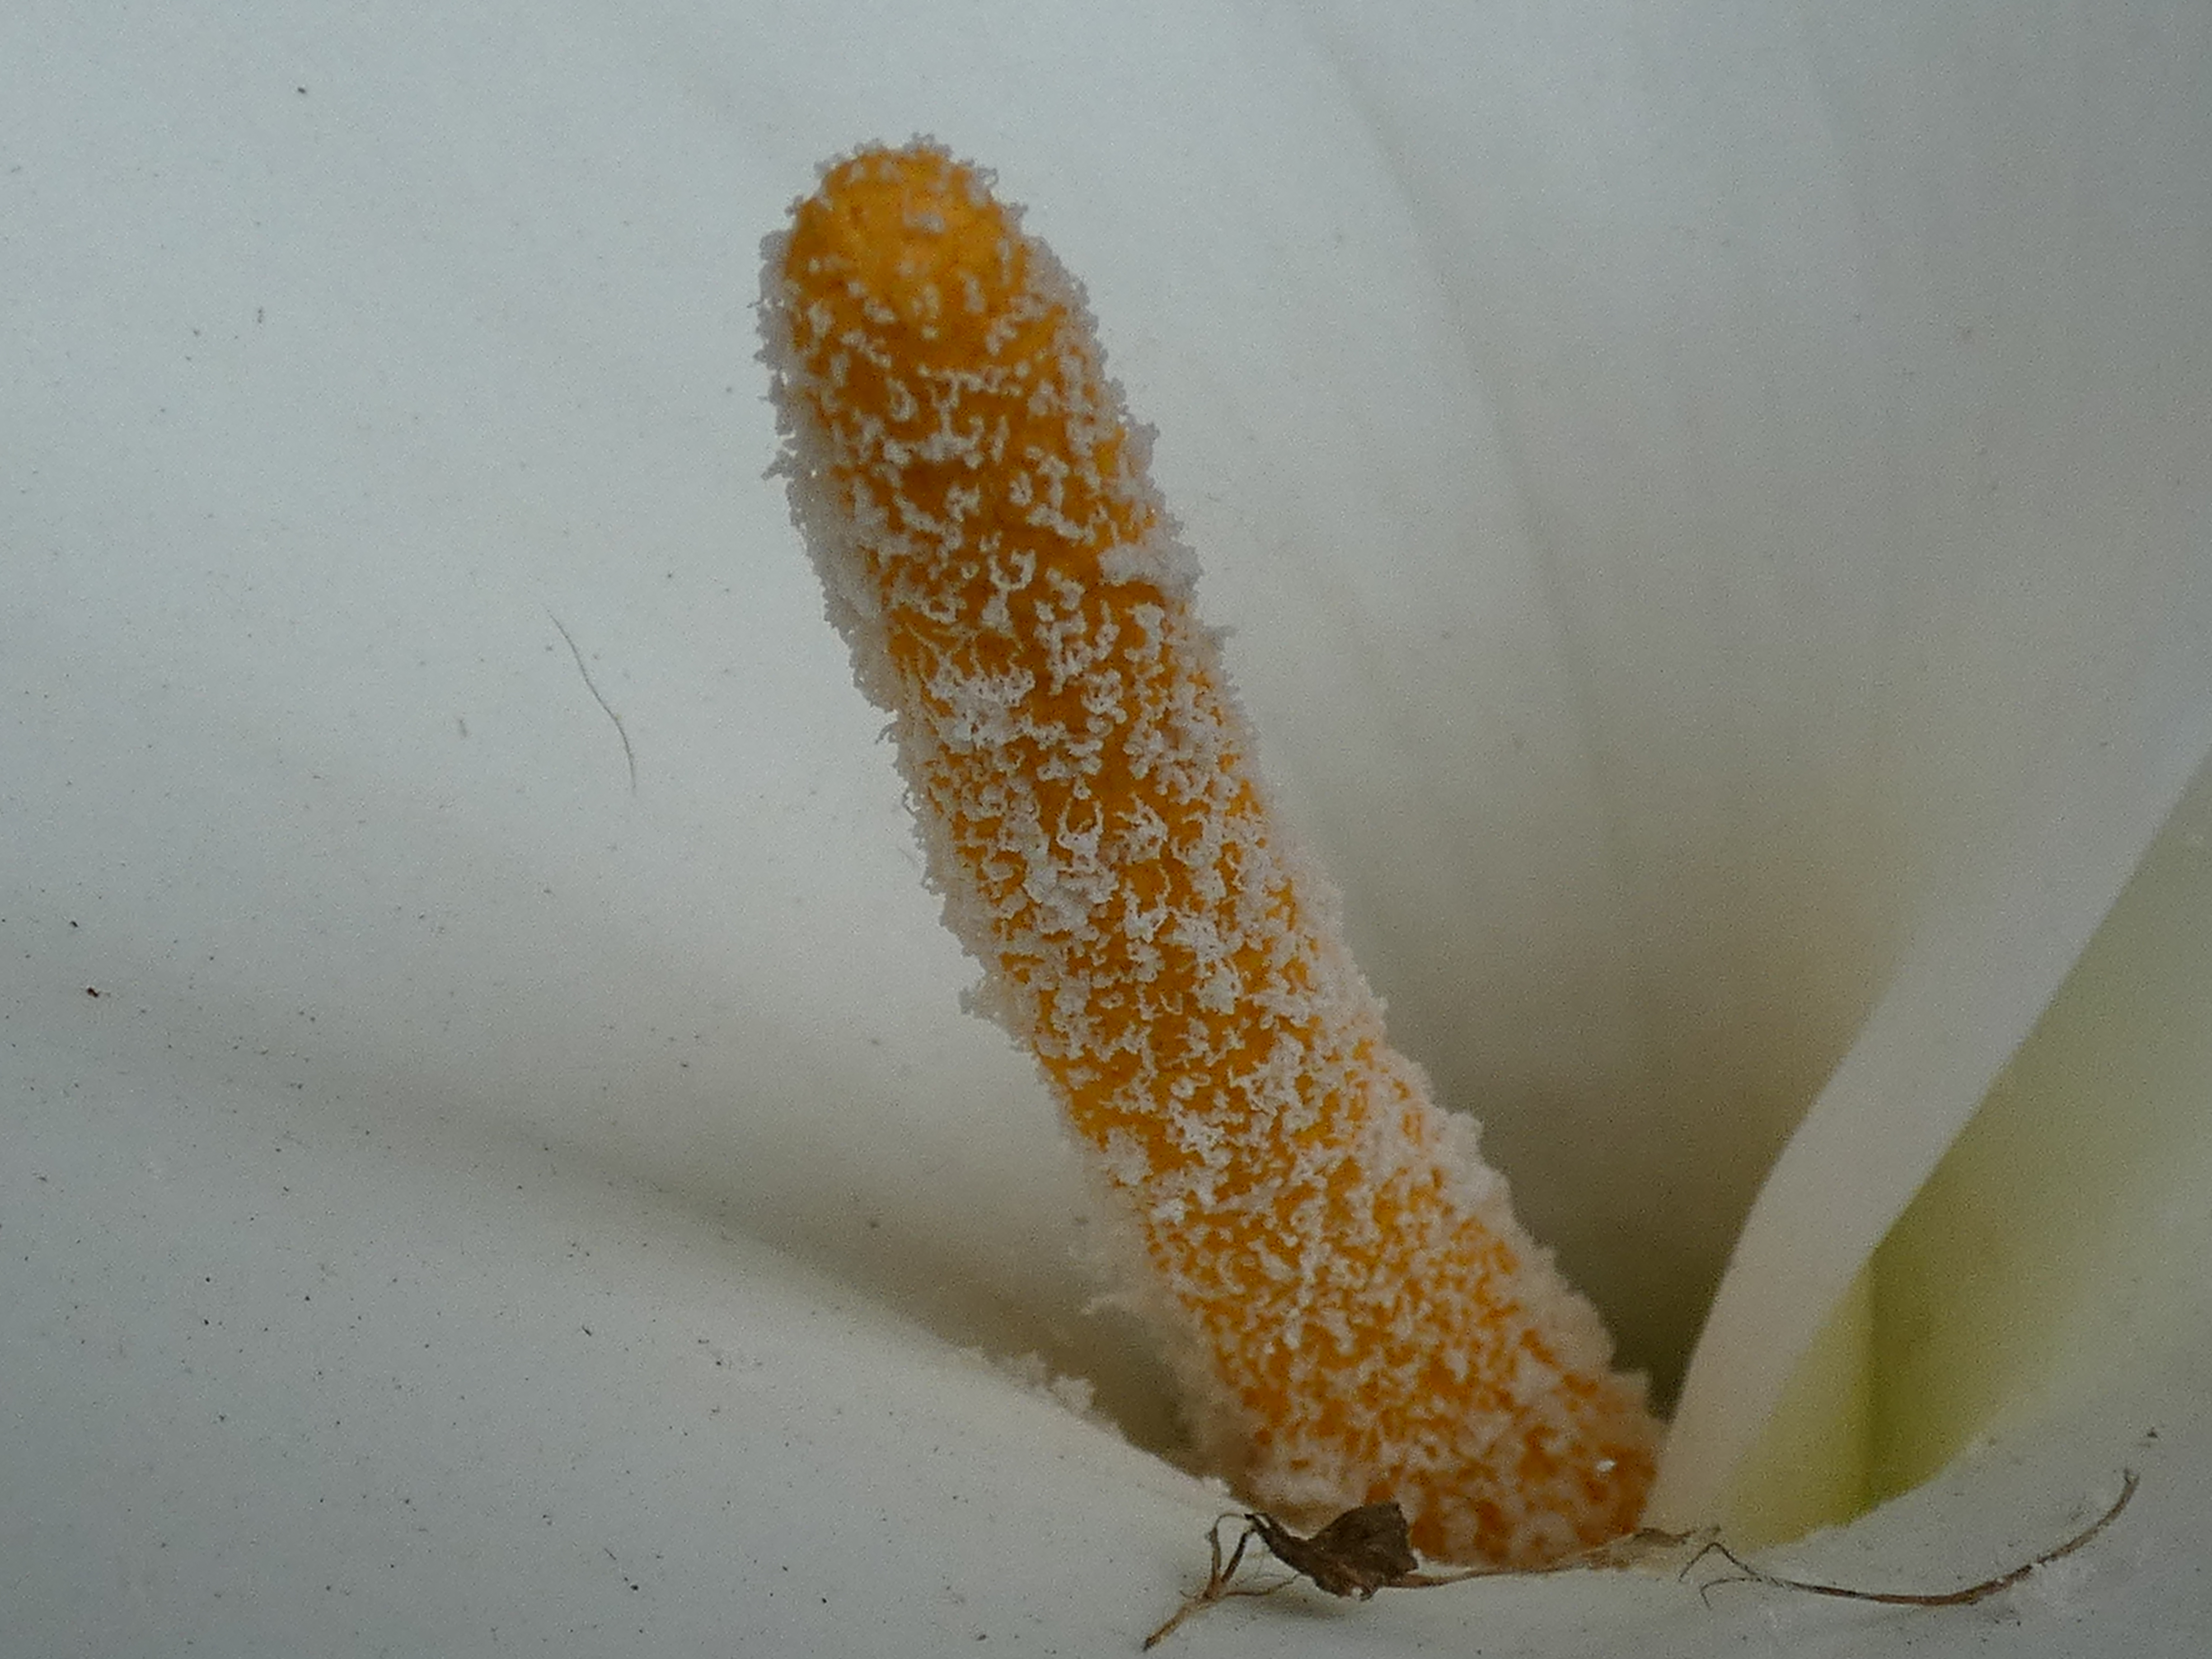 The top of a Calla lily spadix